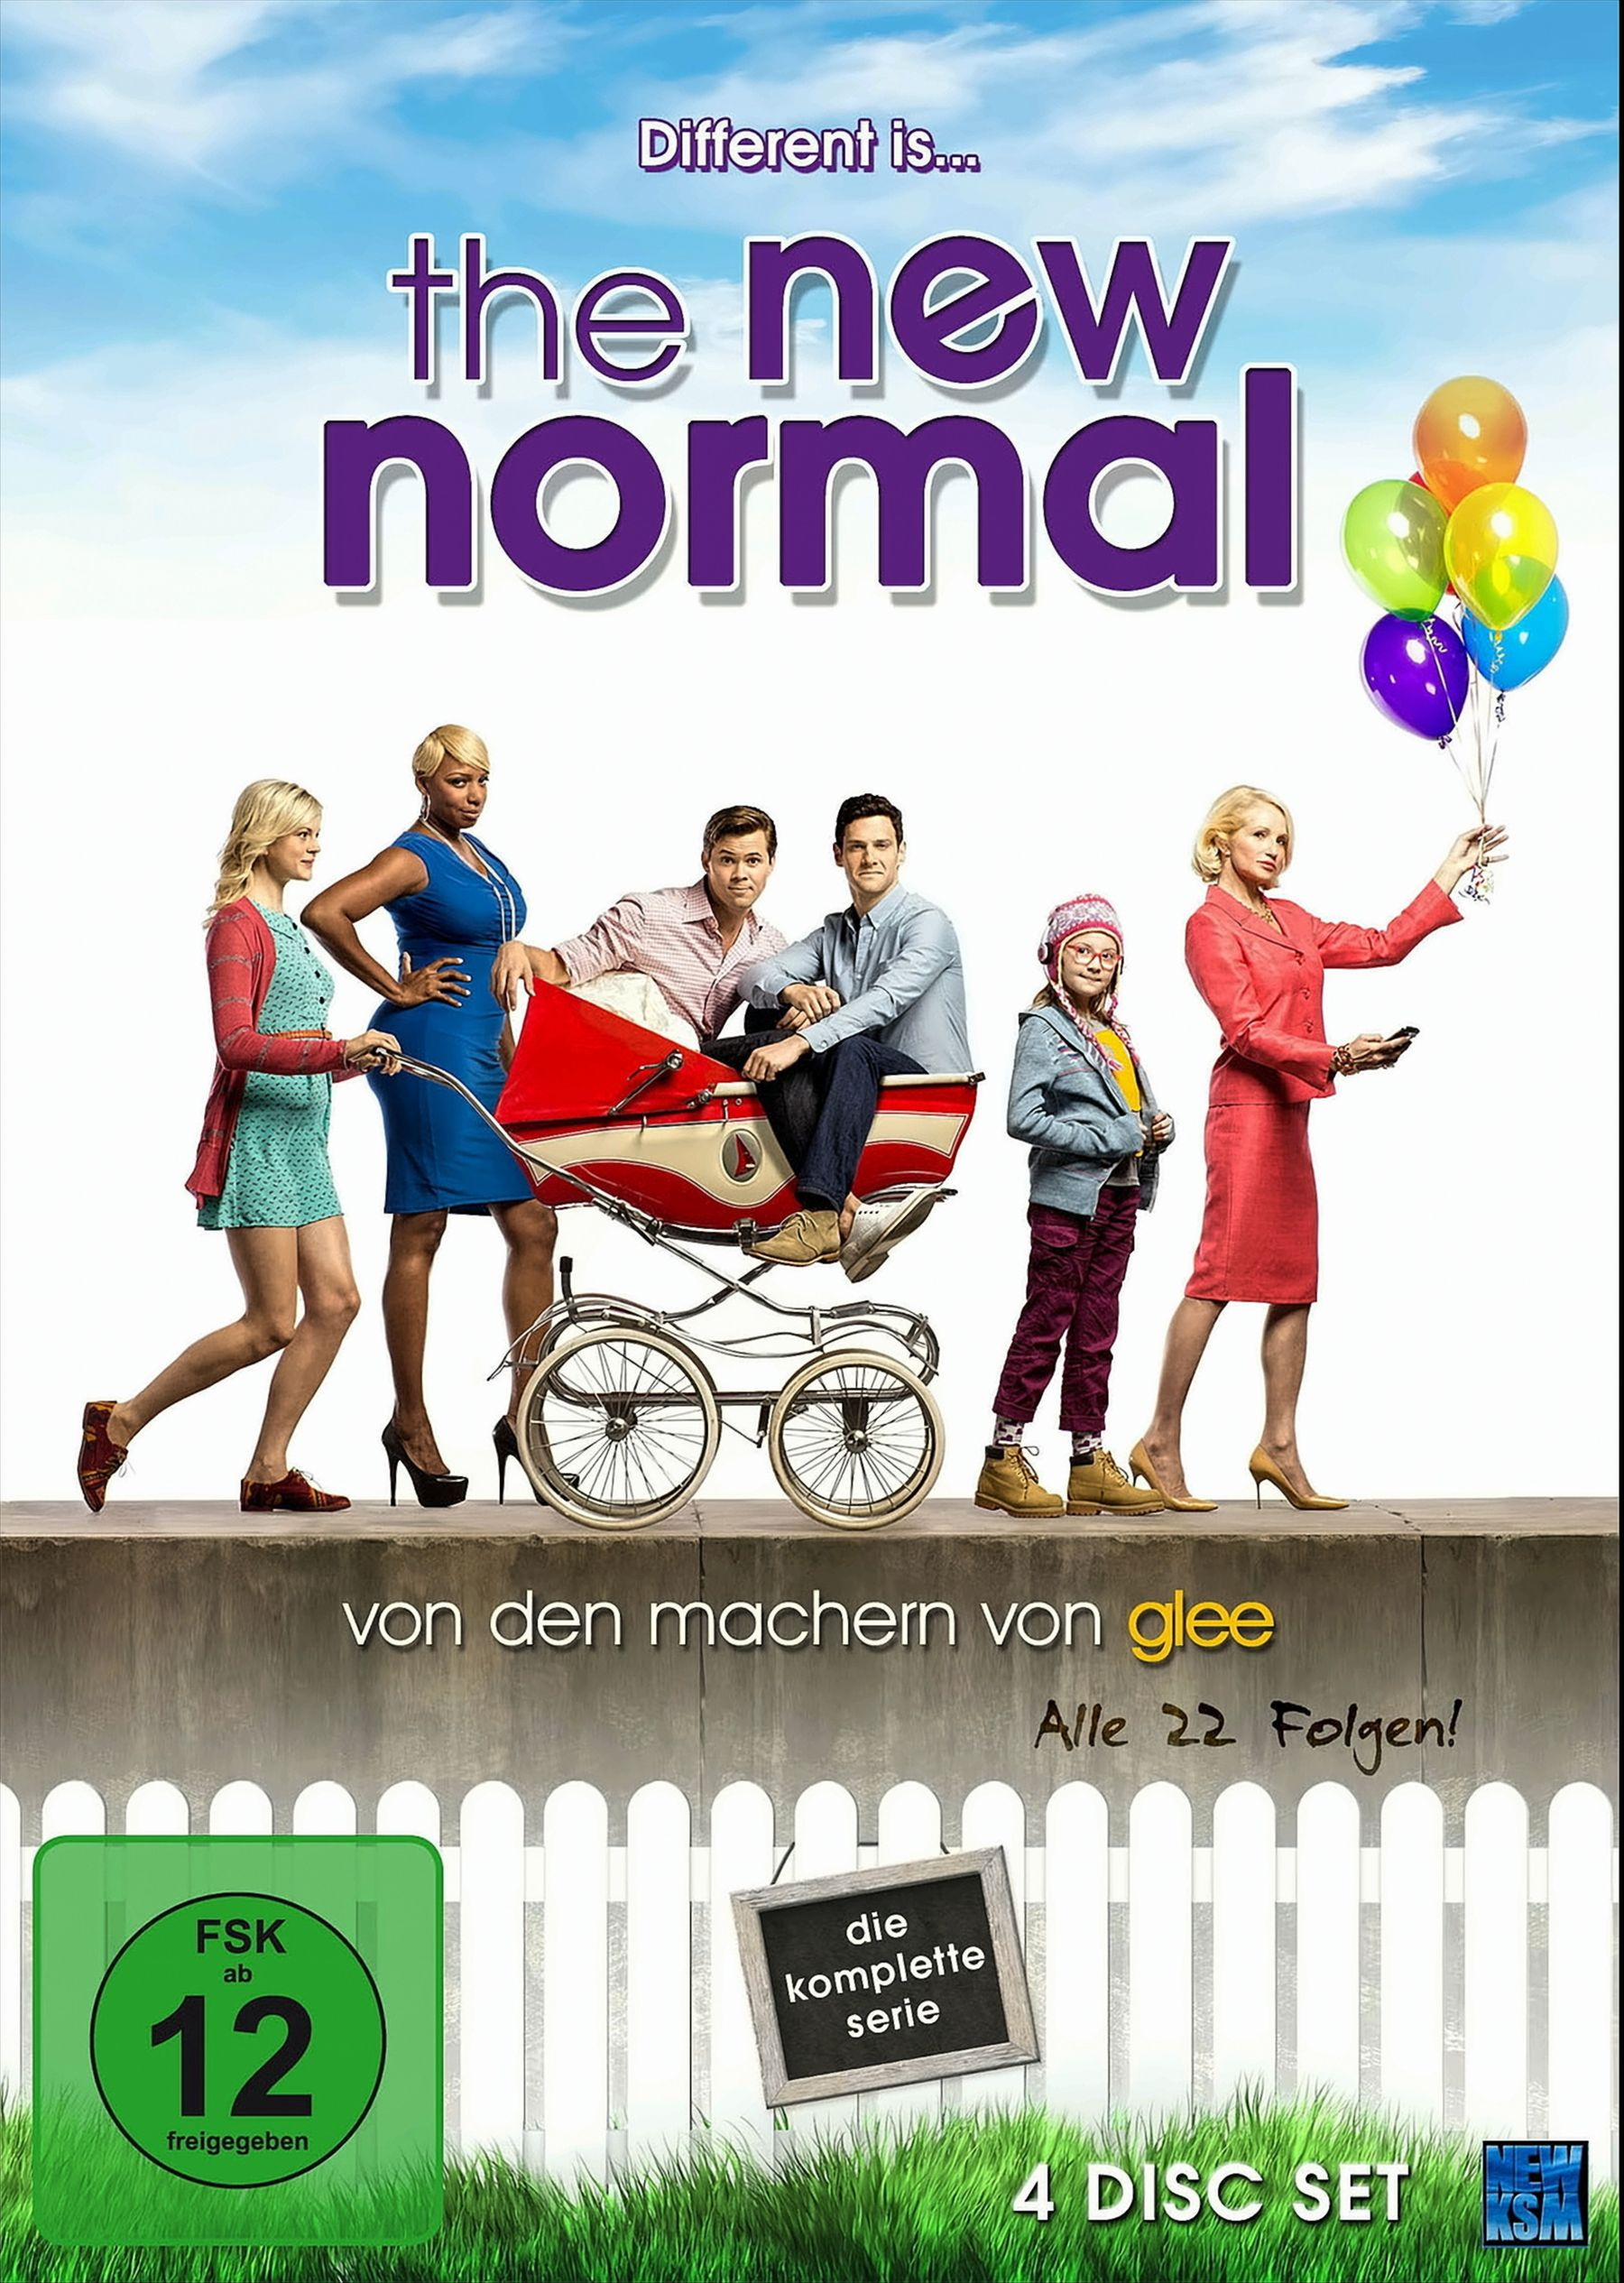 The New Discs) DVD - Normal Serie Die komplette (4